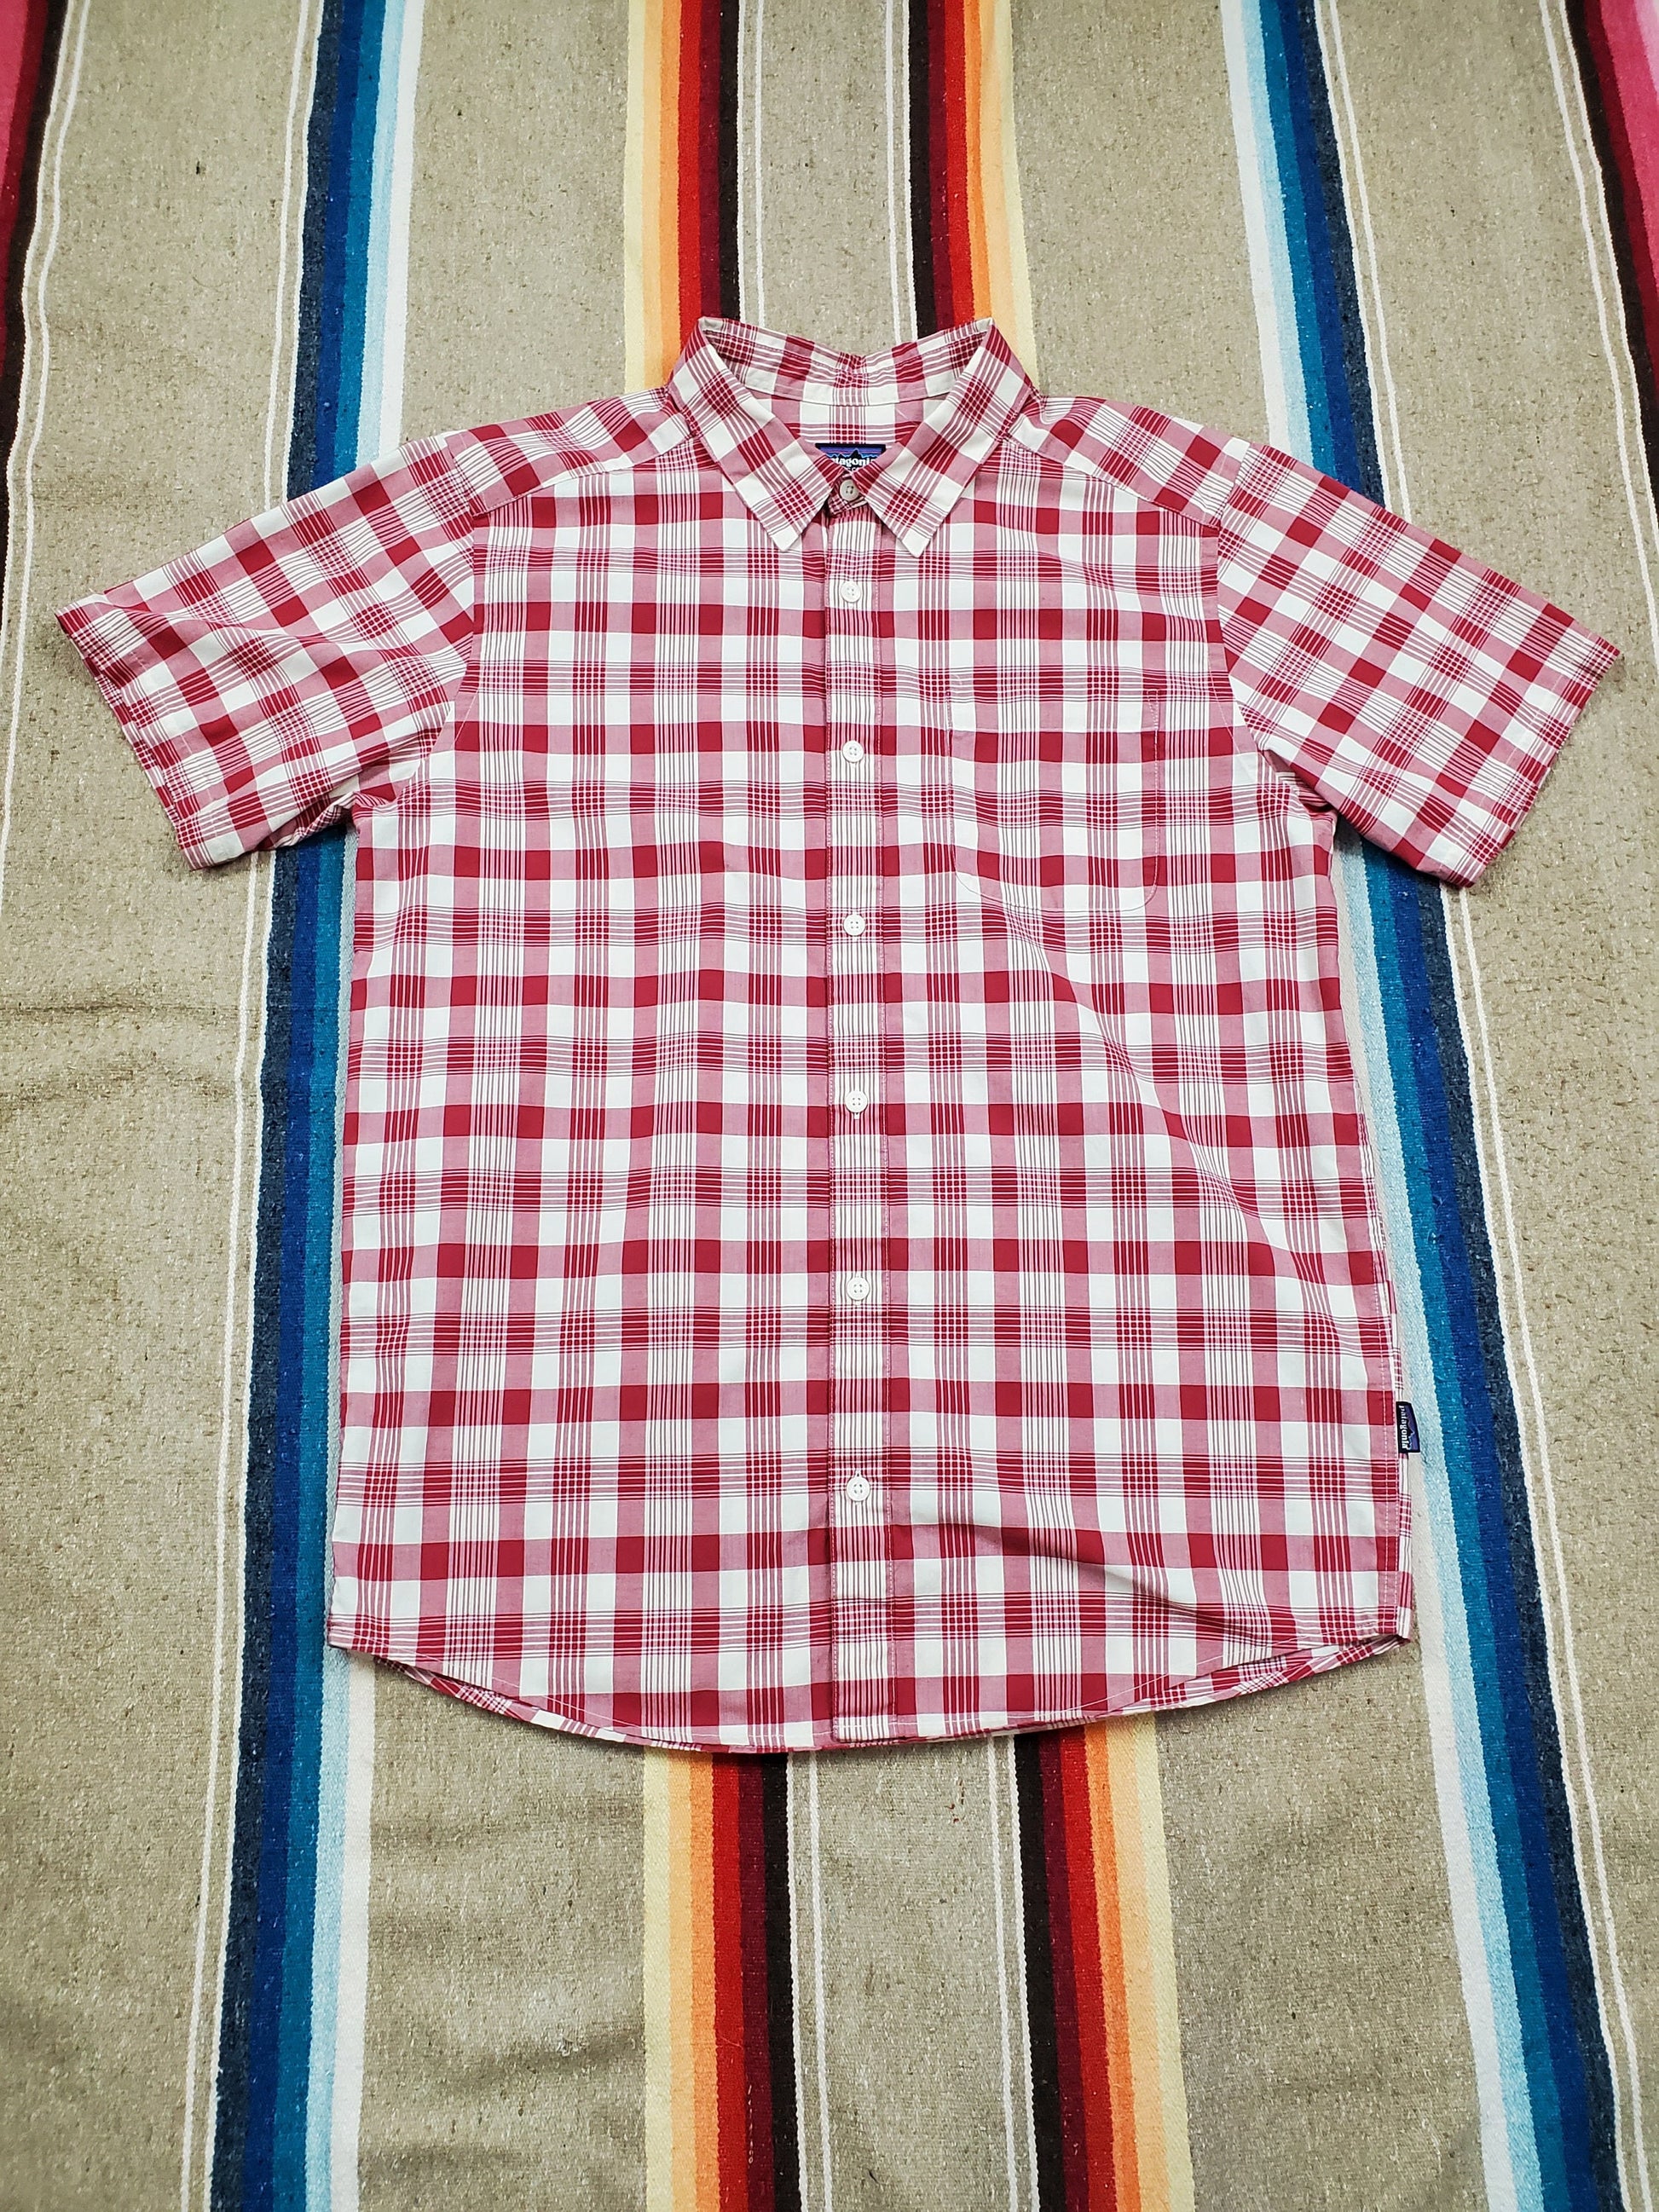 2010s Patagonia Plaid Shortsleeve Shirt Size M/L